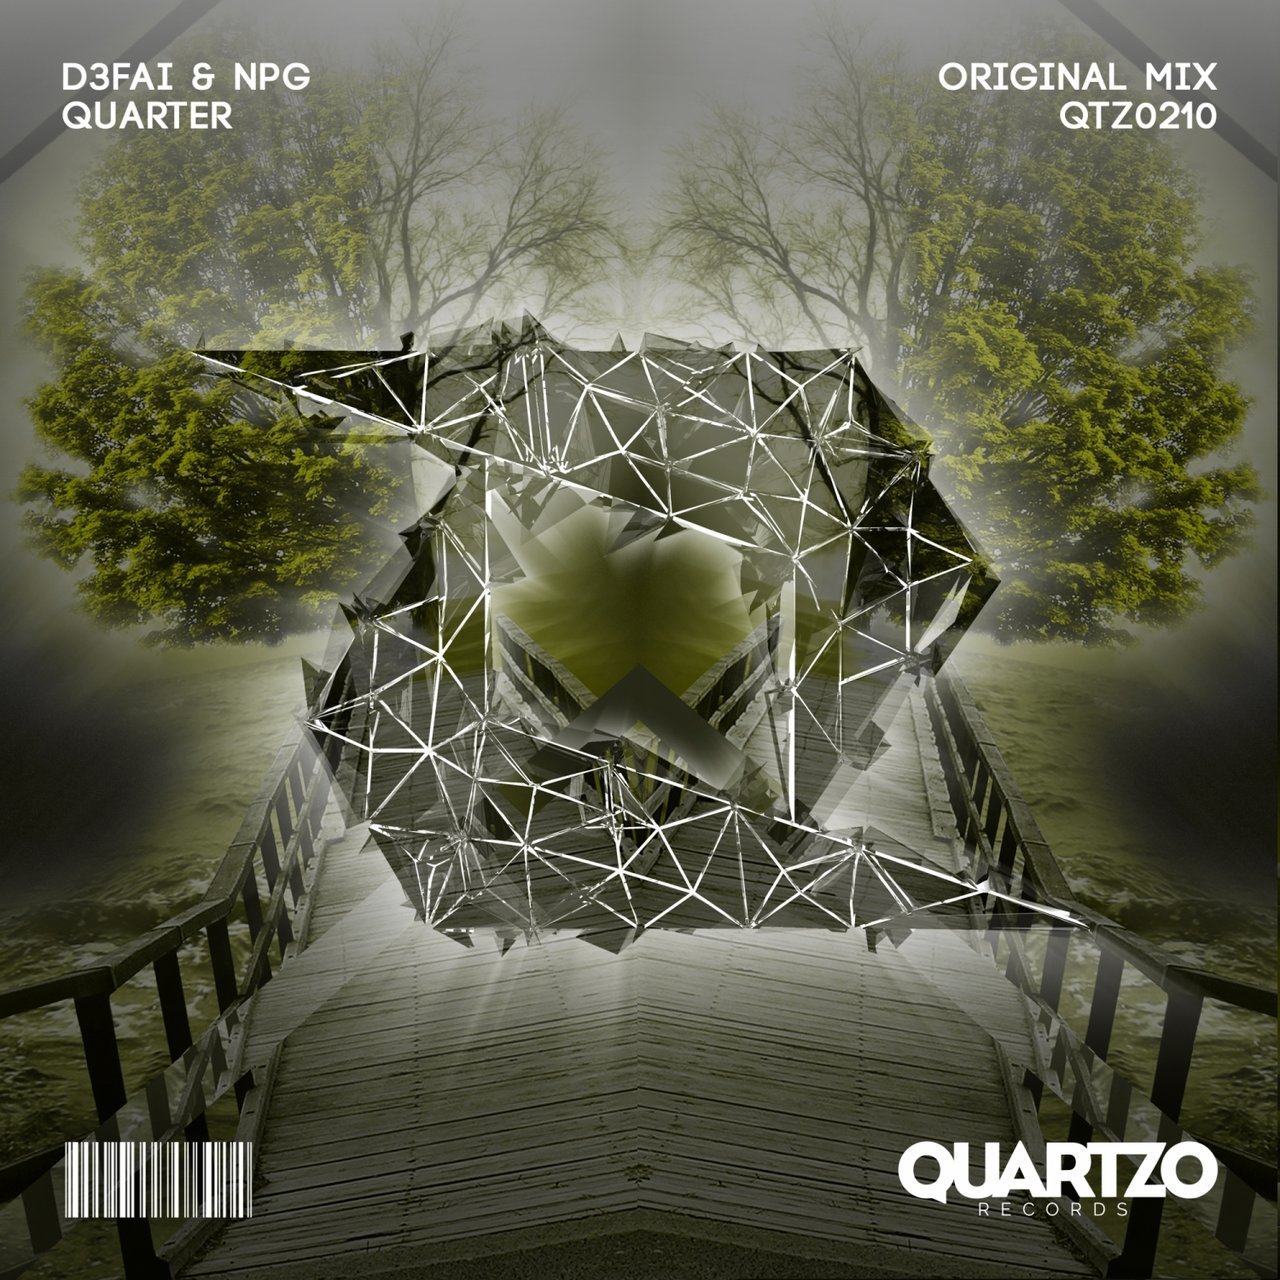 D3FAI & N.P.G - Quarter (Original Mix)